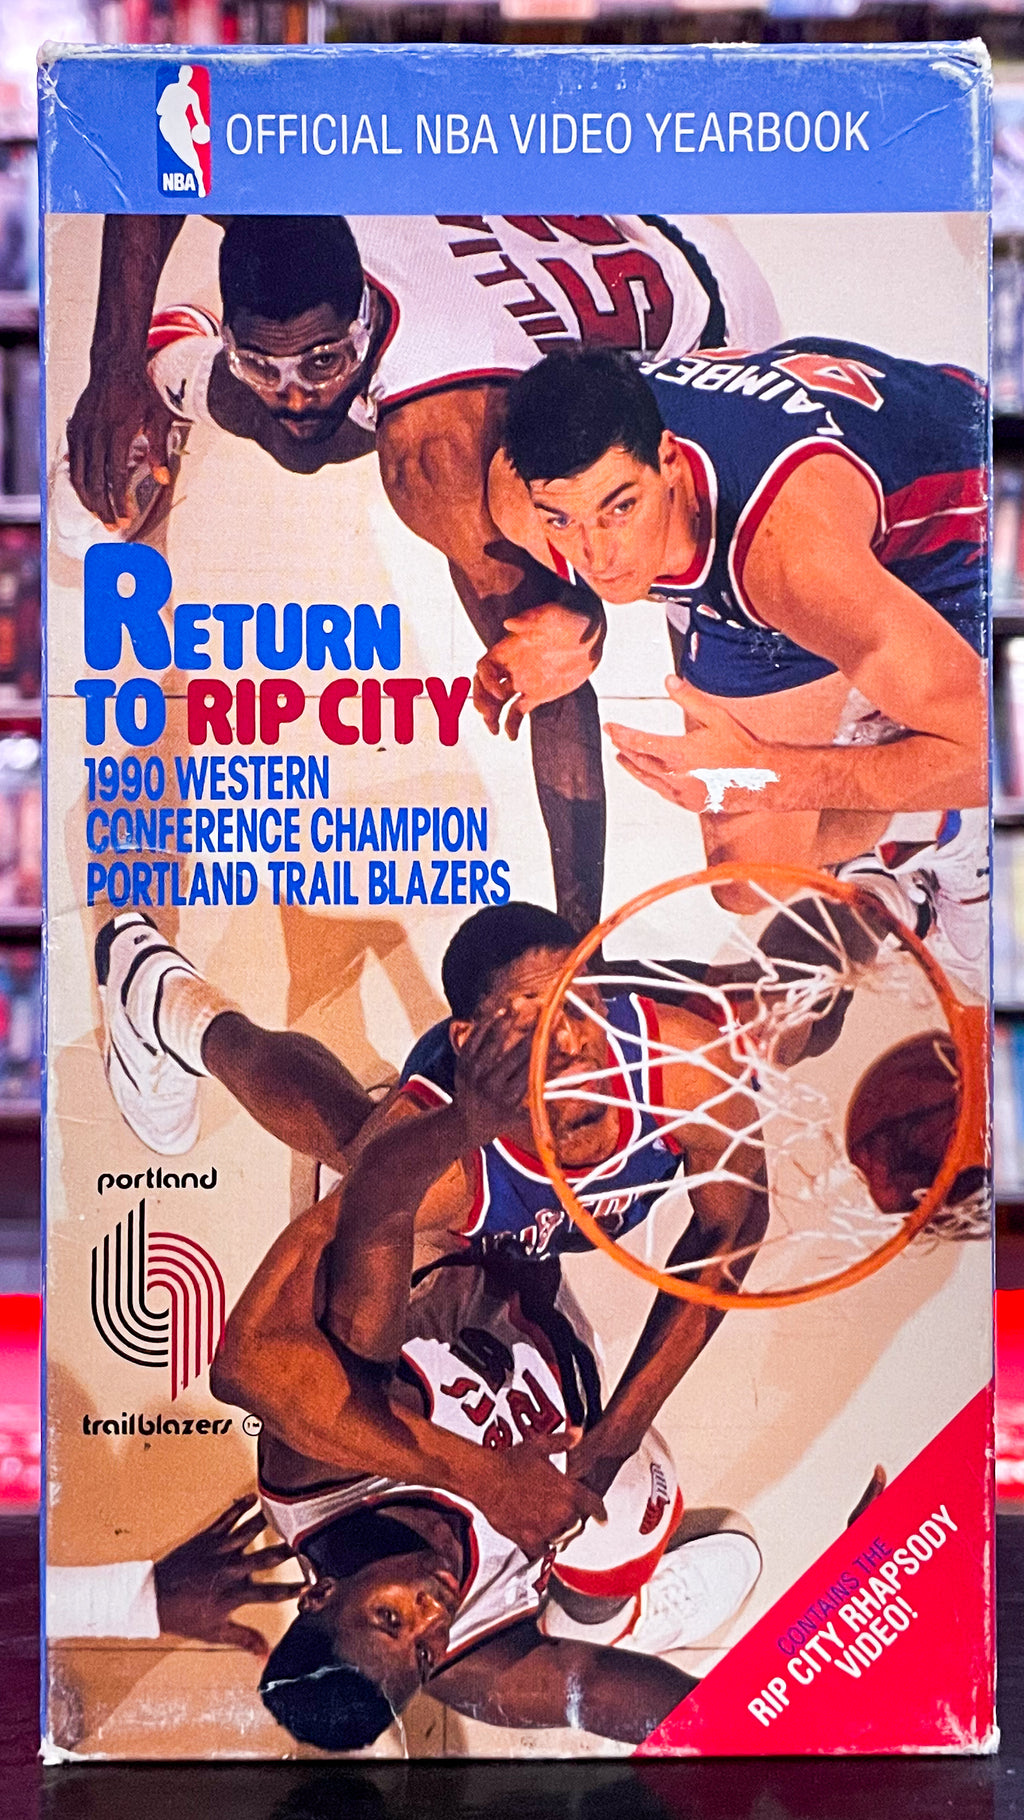 Return To Rip City 1990 Western Conference Champion Portland Trail Blazers